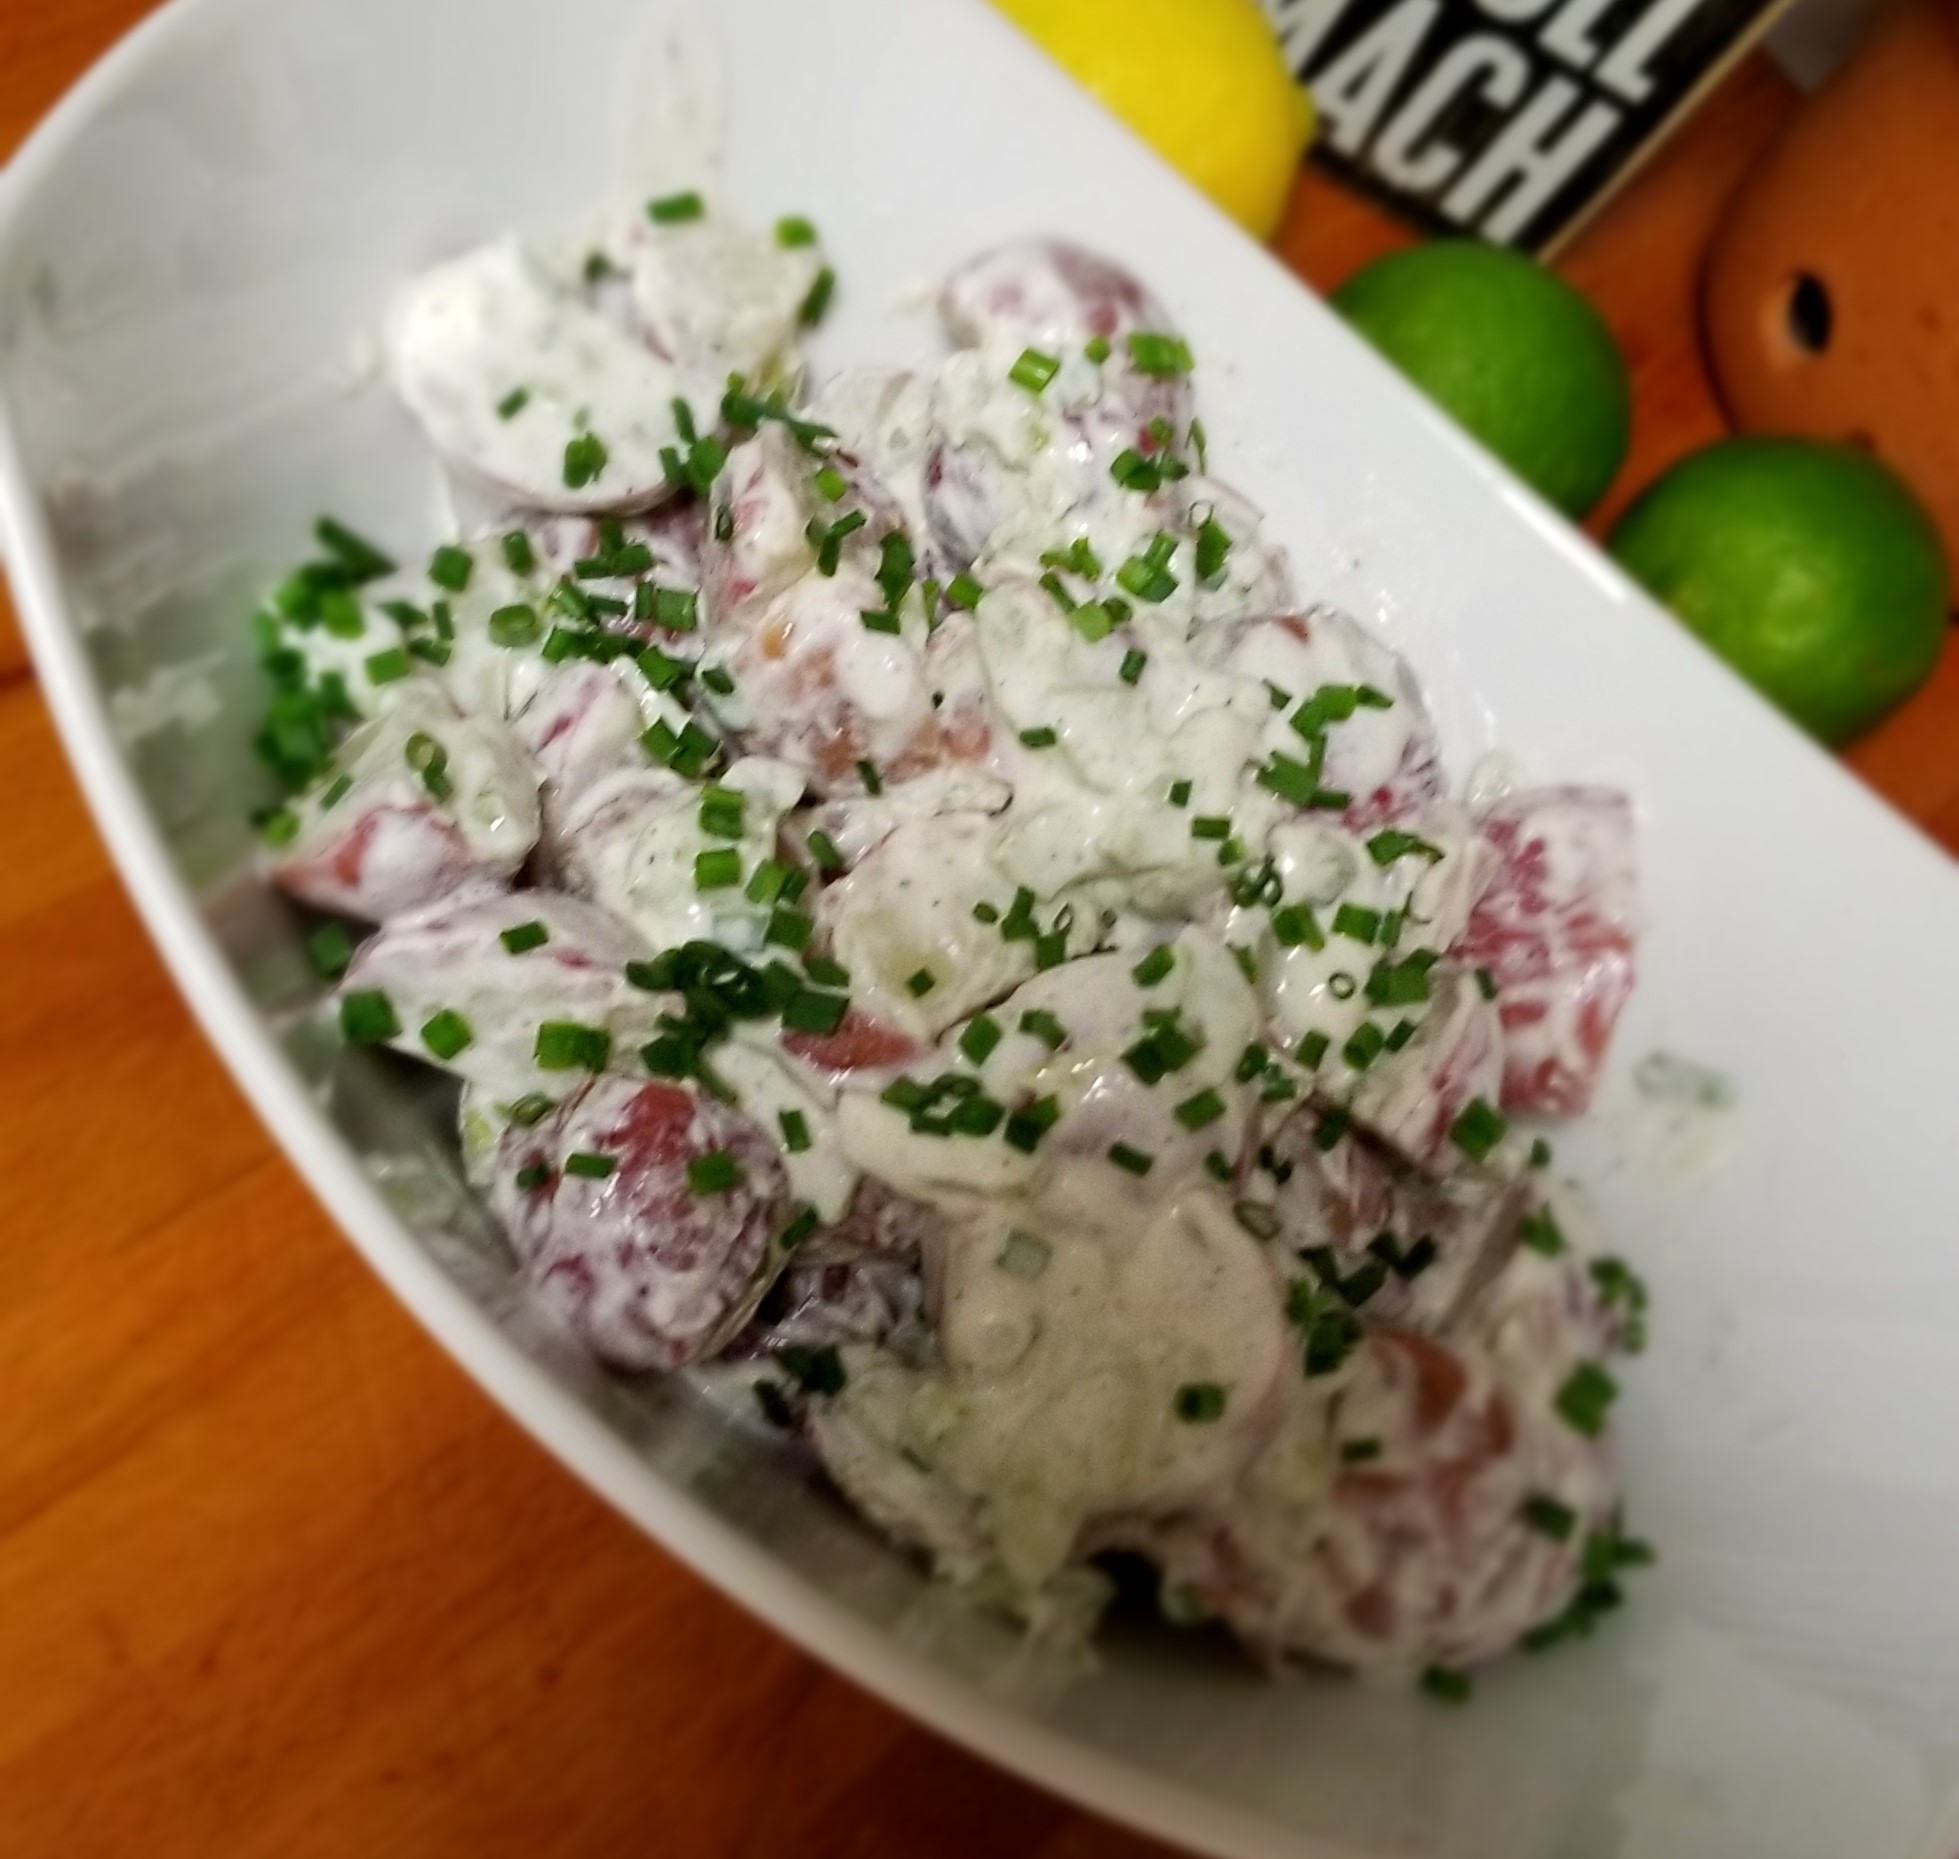 Lemony Creamy Potato Salad with Sour Cream